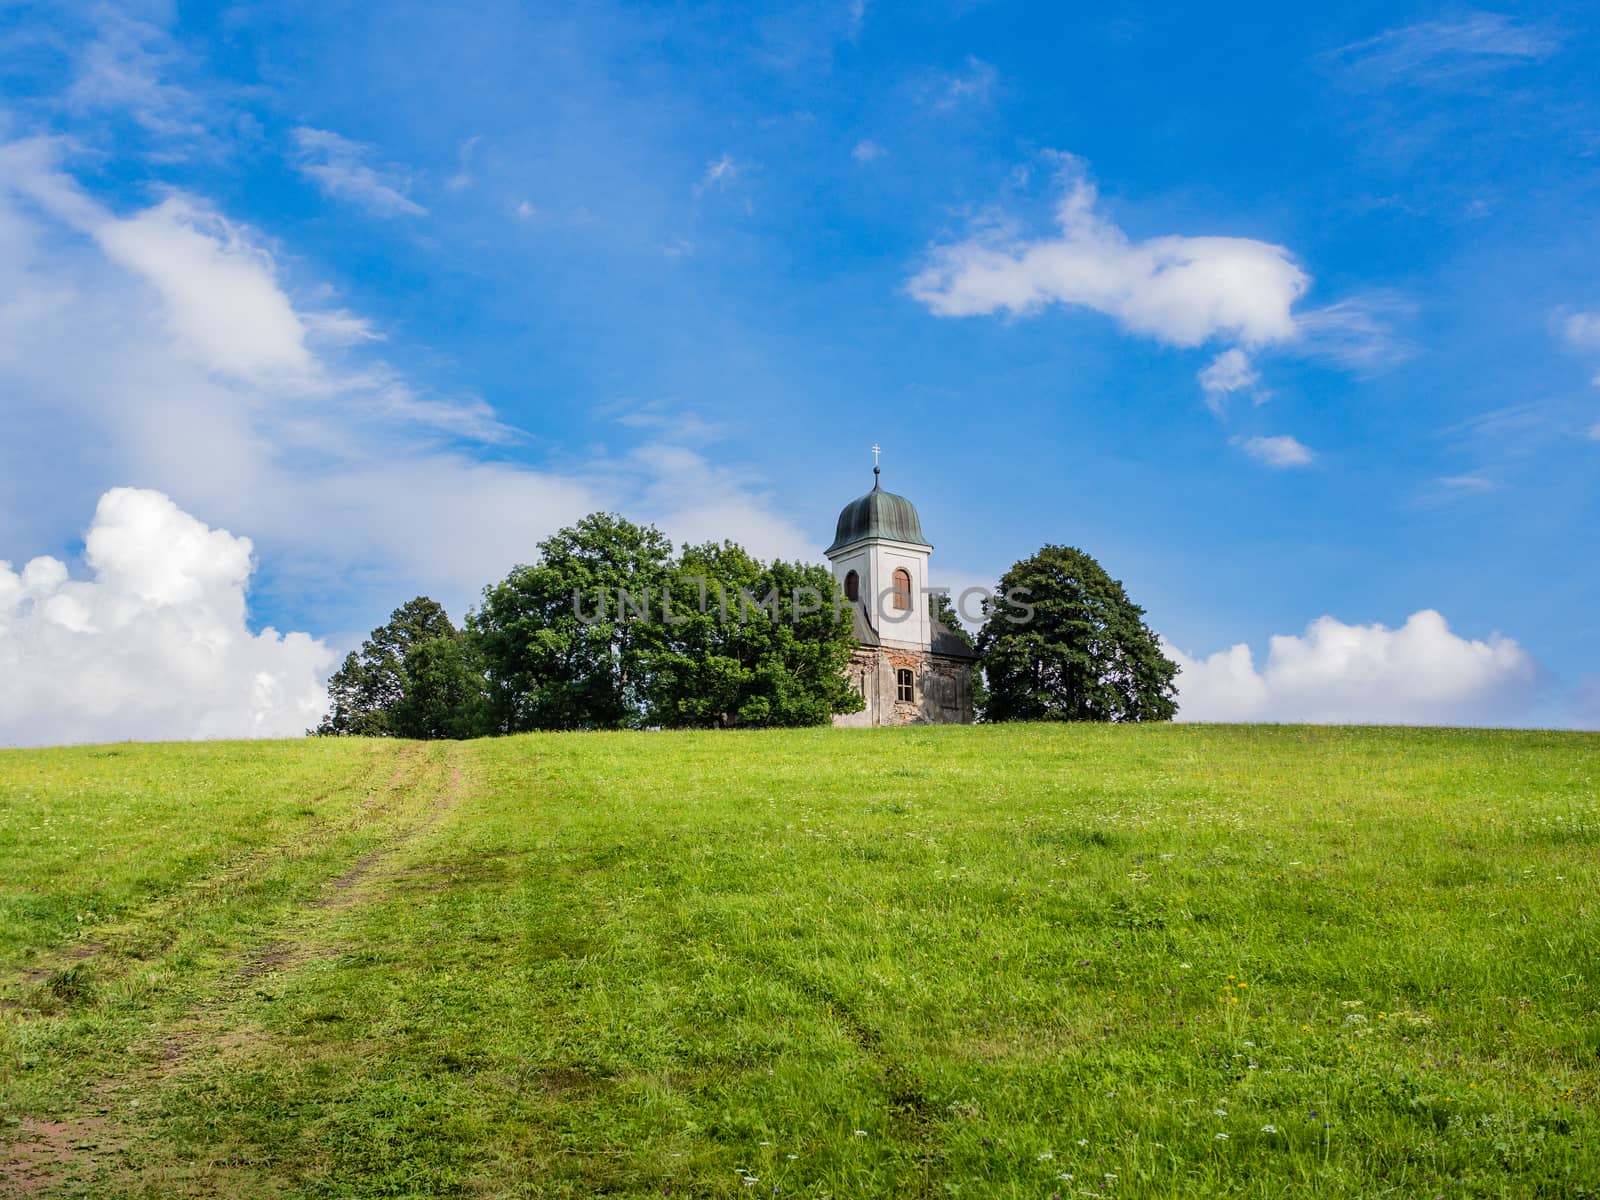 Catholic chapel on top of hill under blue sky by weruskak